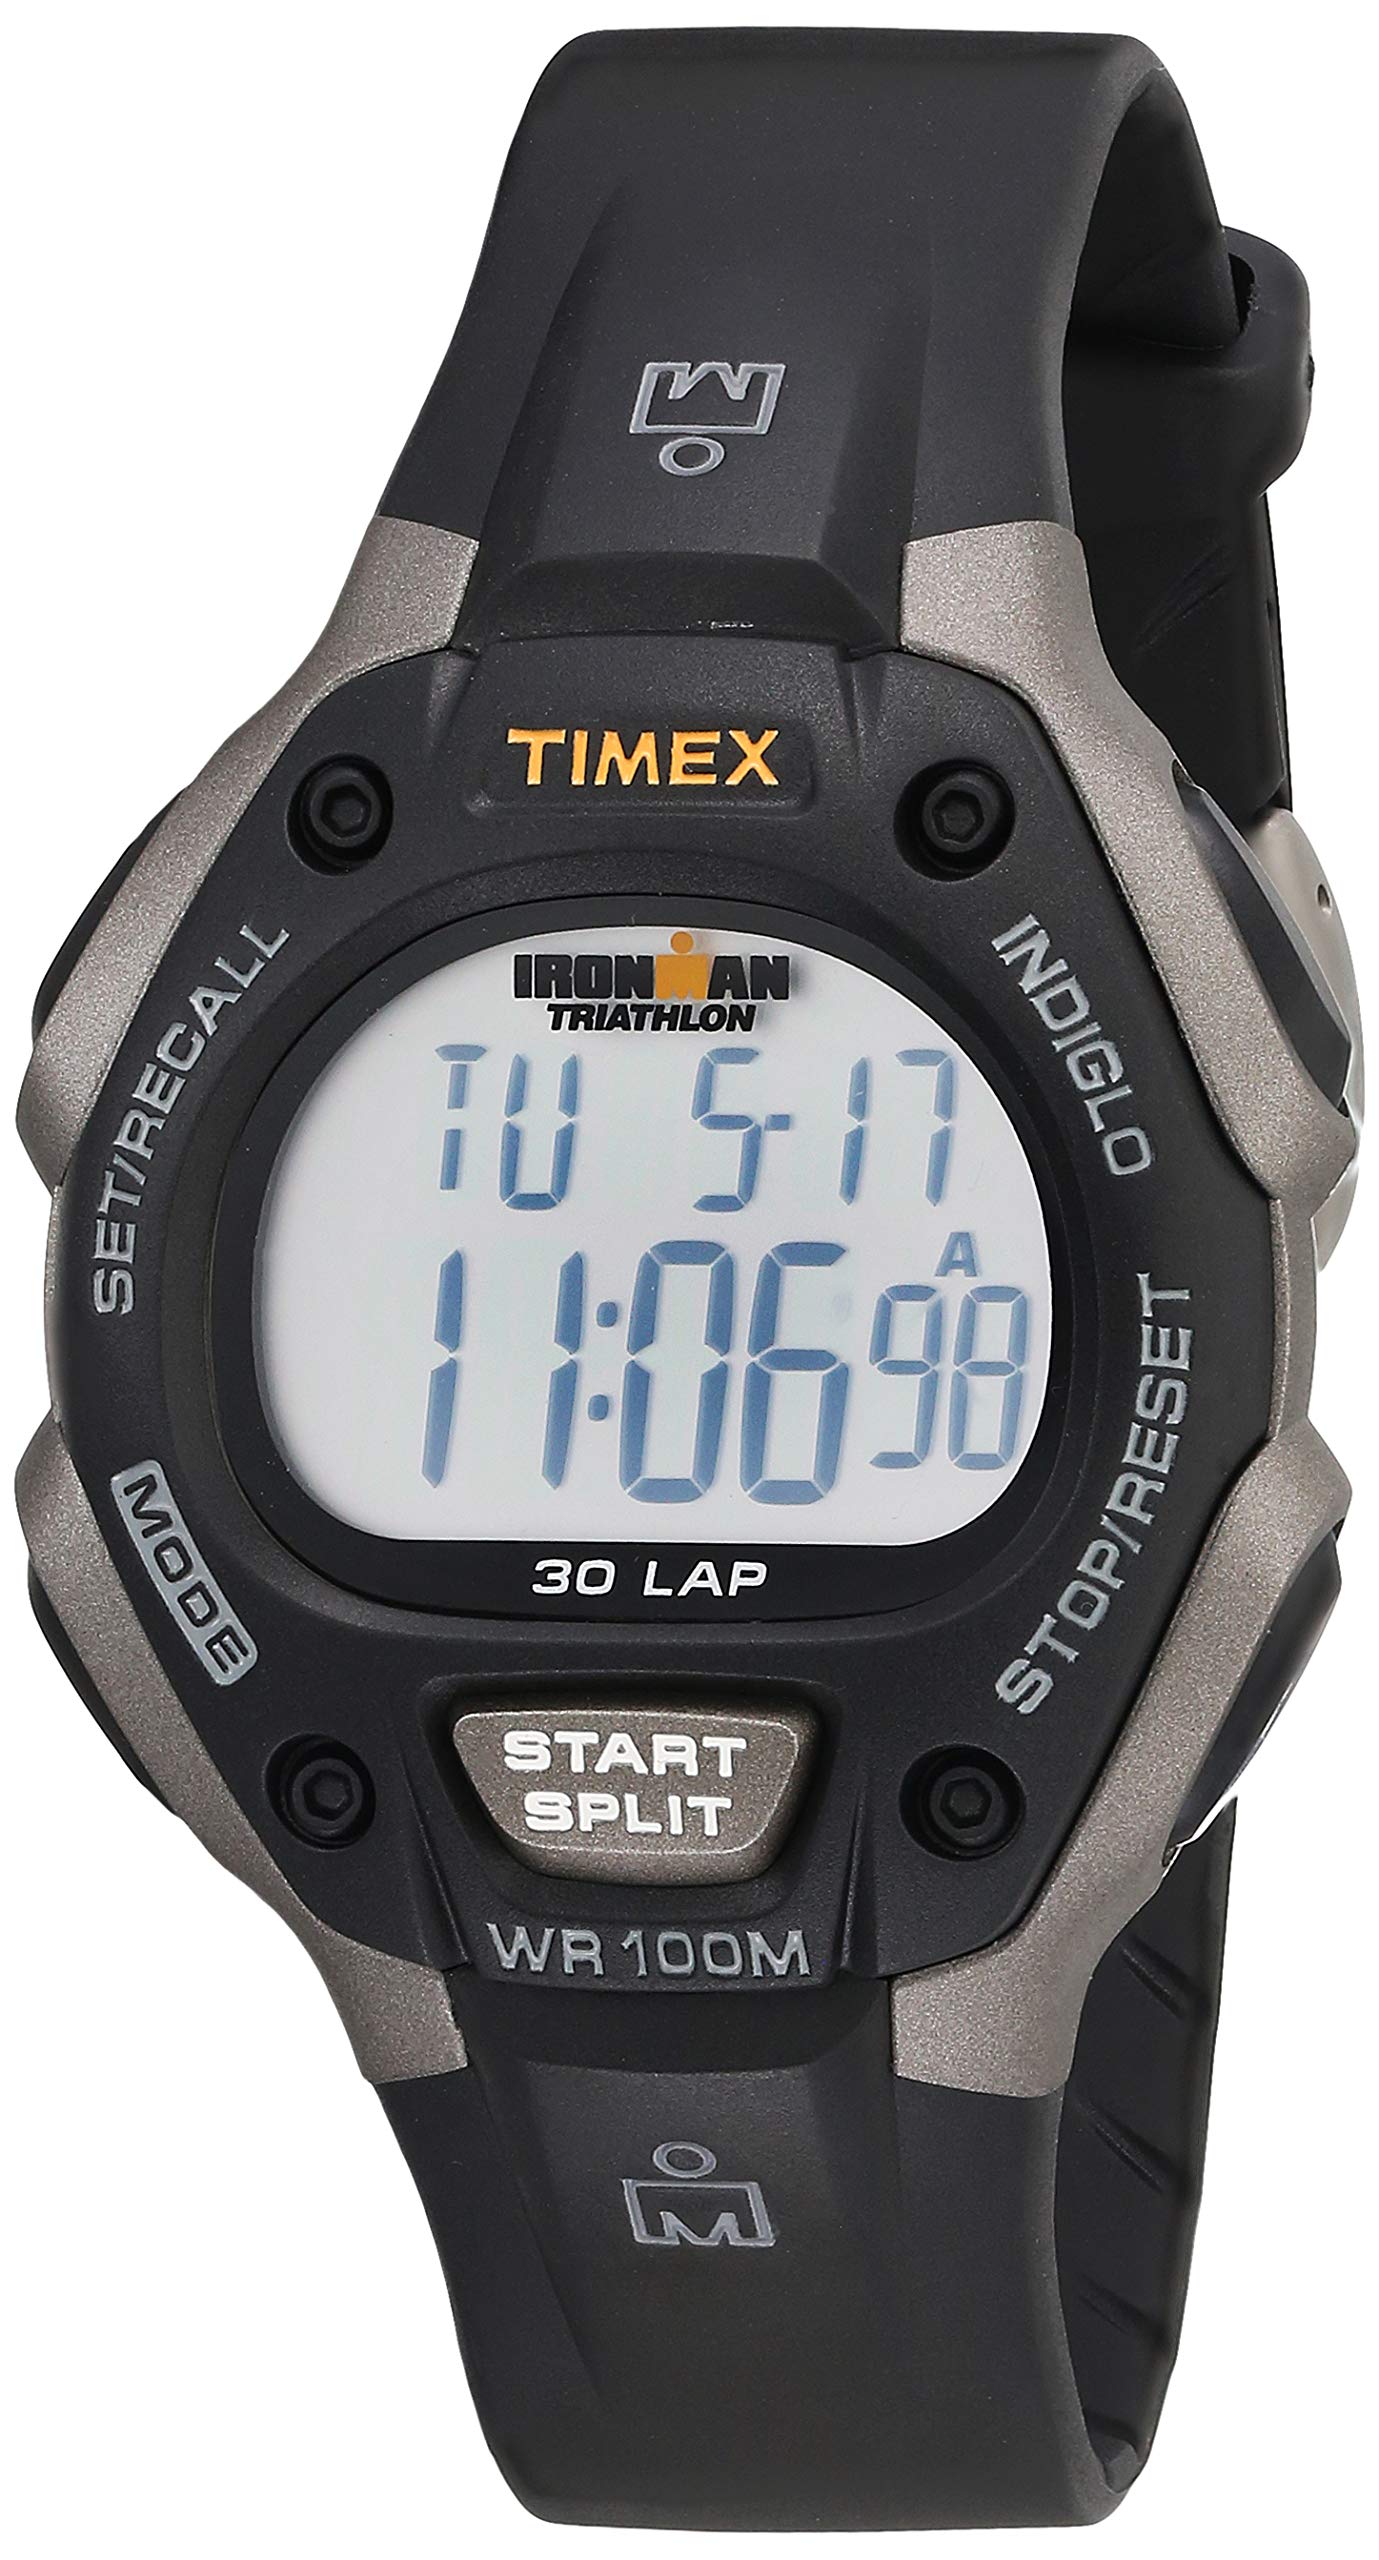 Timex Ironman Classic 30 Full-Size 38mm Watch